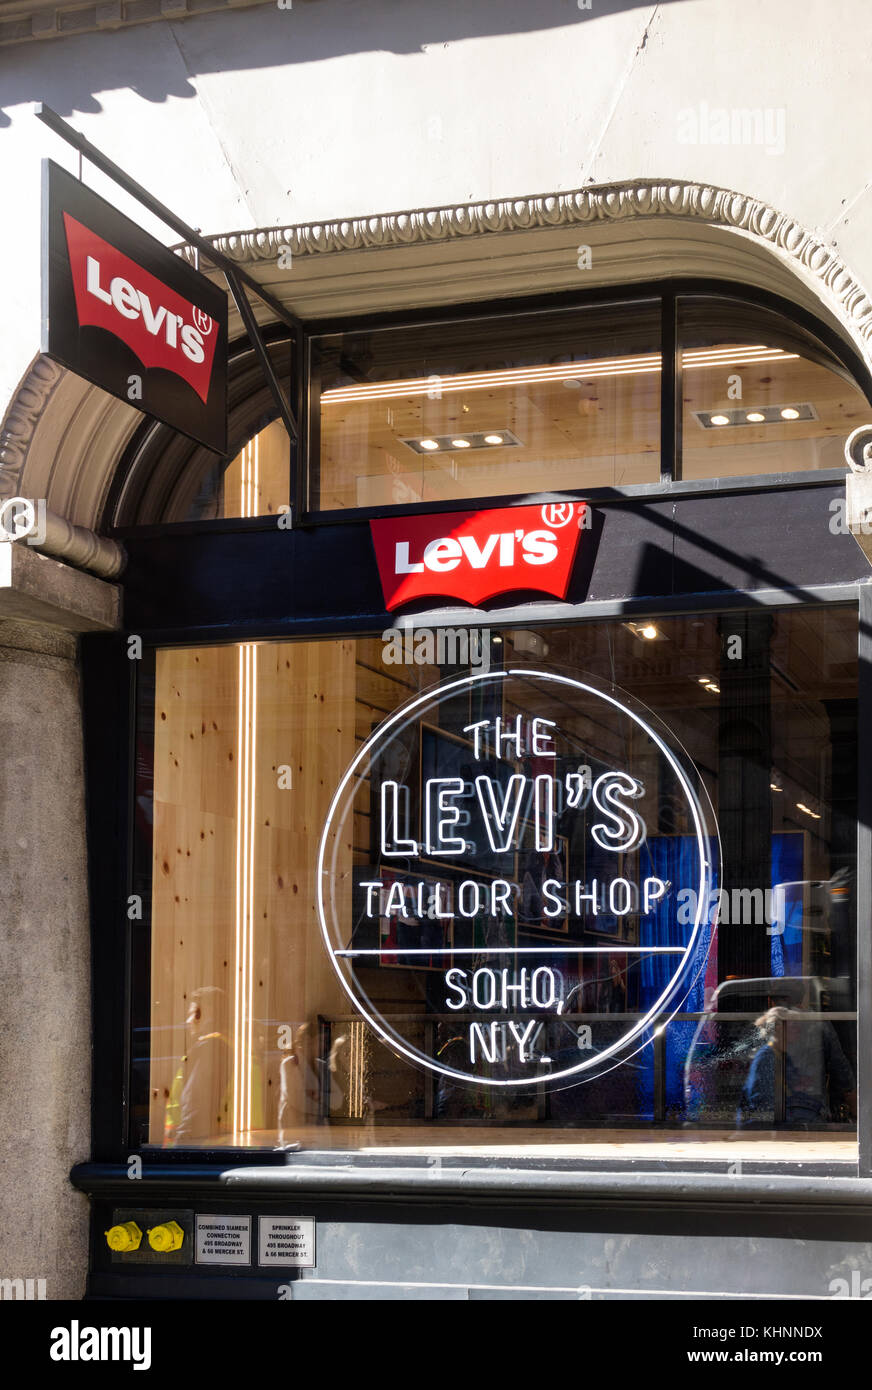 Levi's Tailor Shop in SoHo in New York City Stock Photo - Alamy